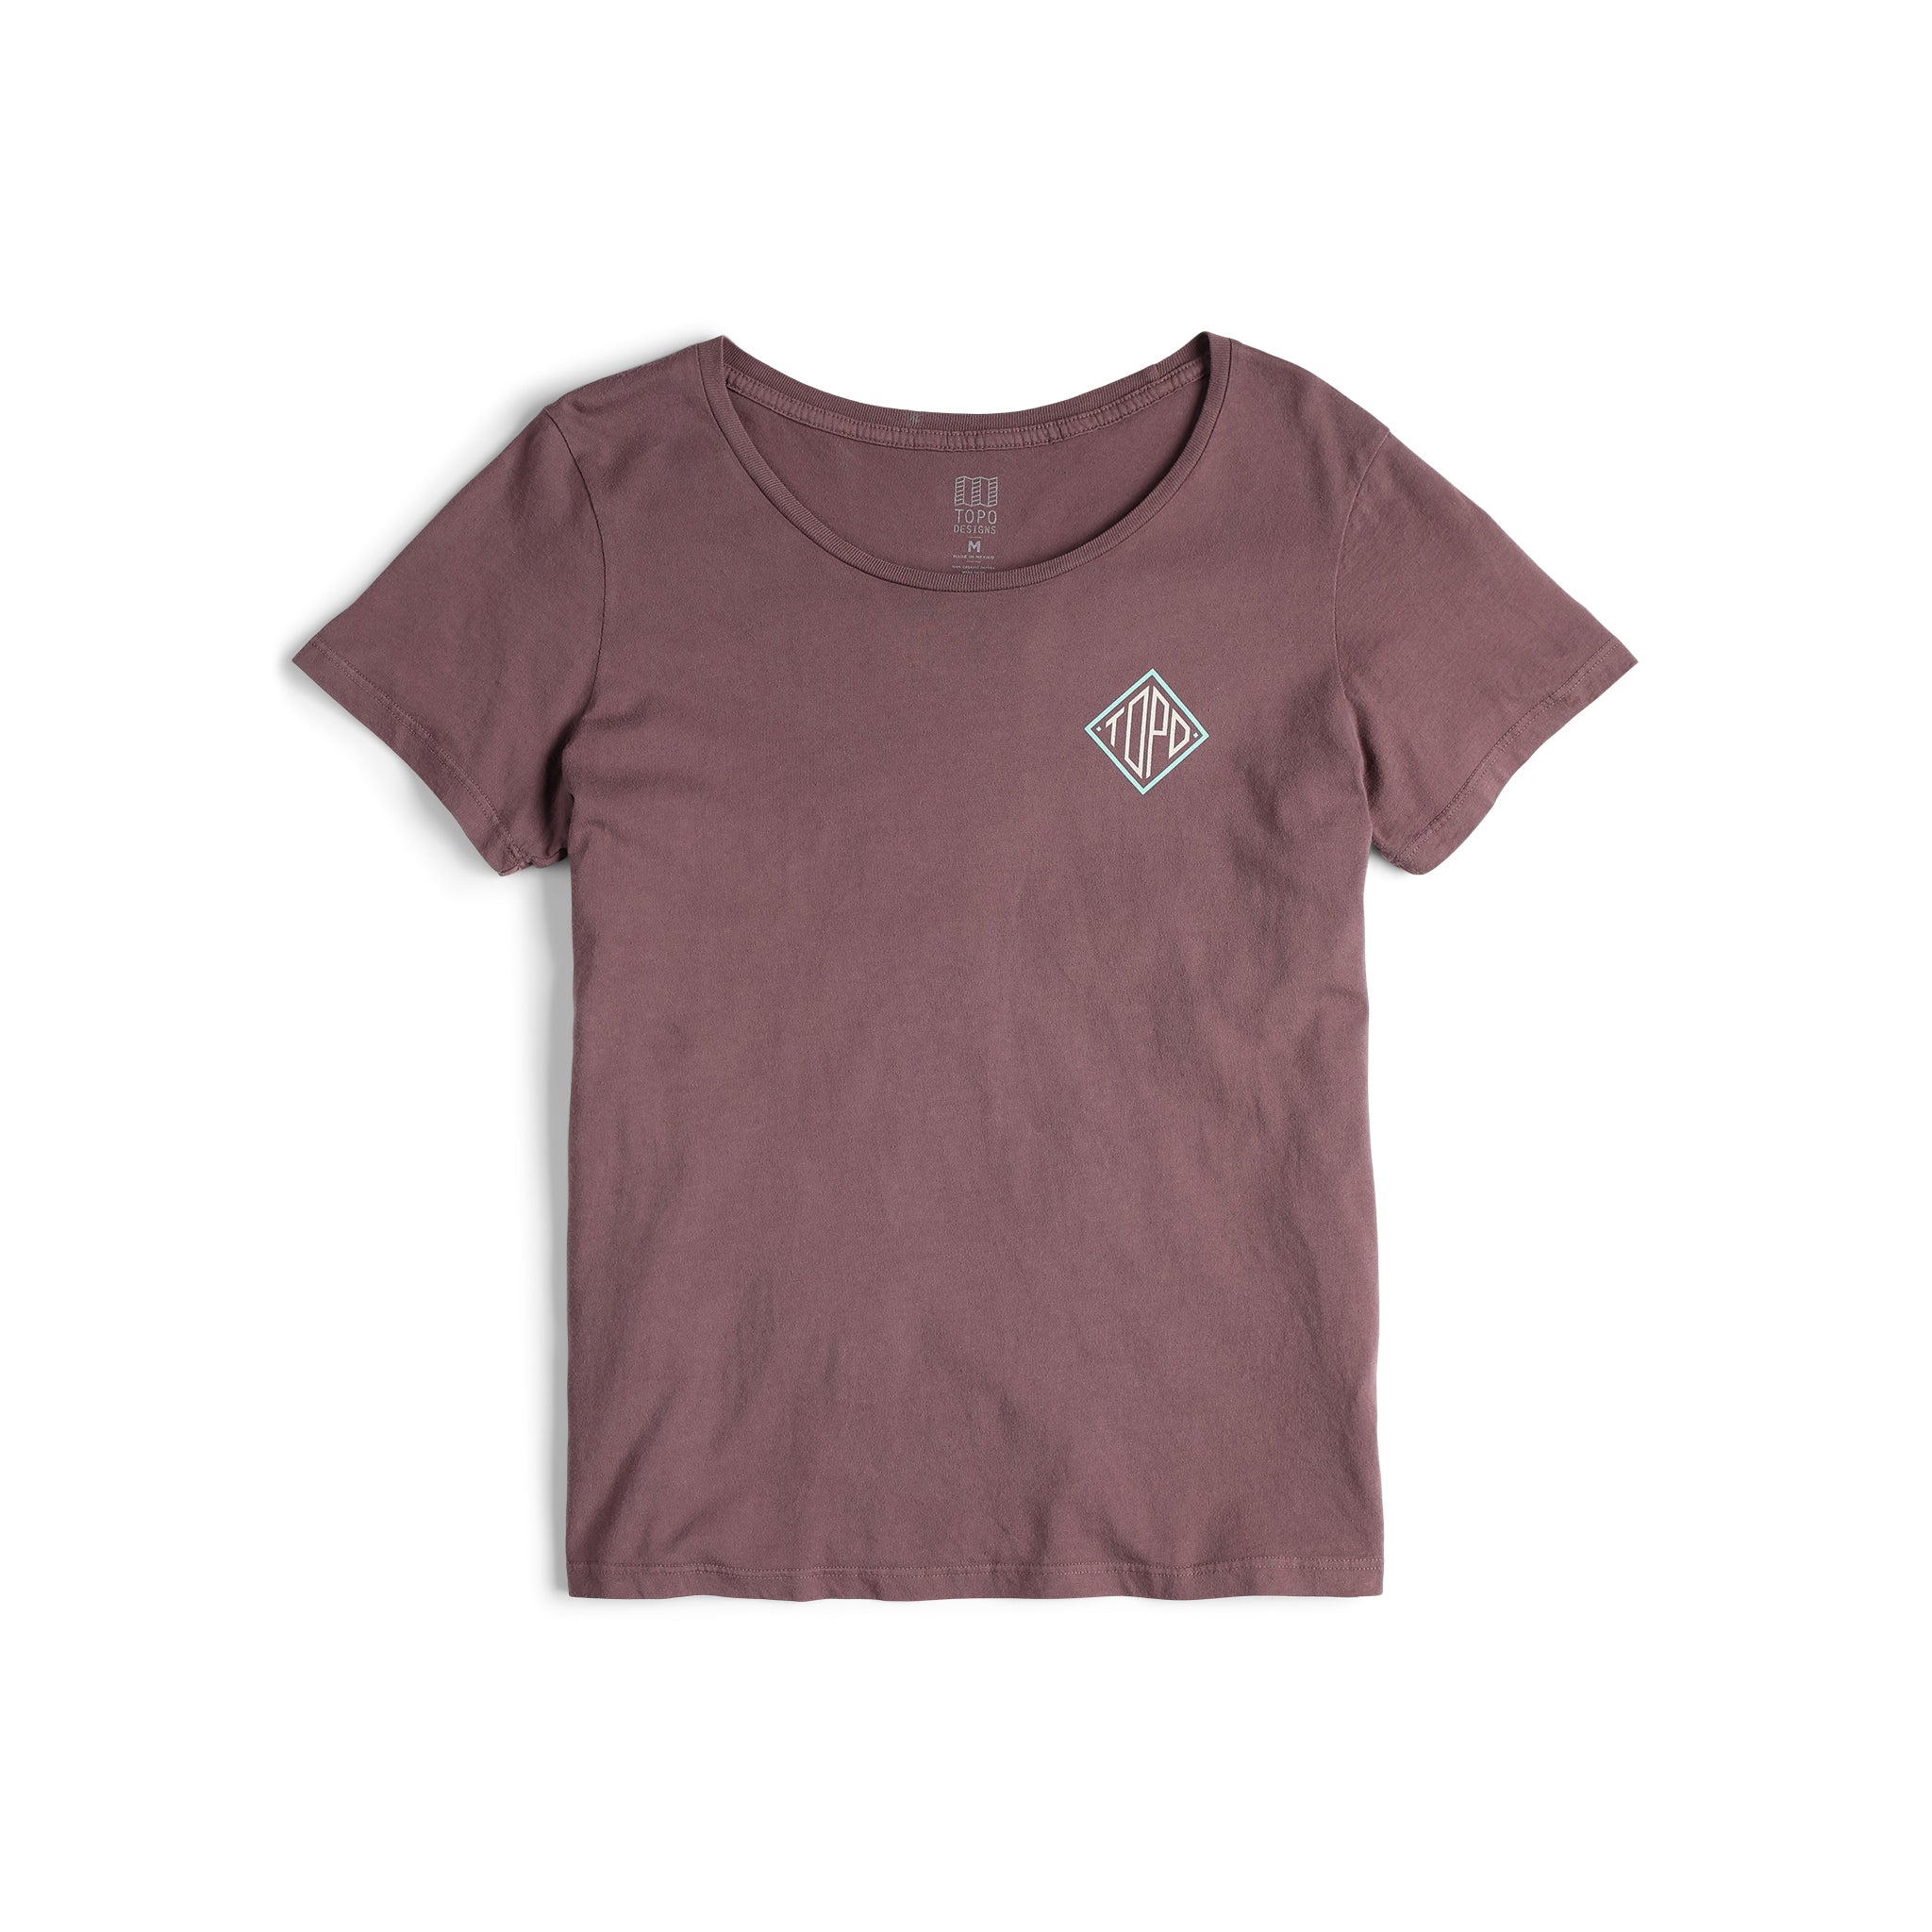 Women's Graphic T-Shirts &Tanks